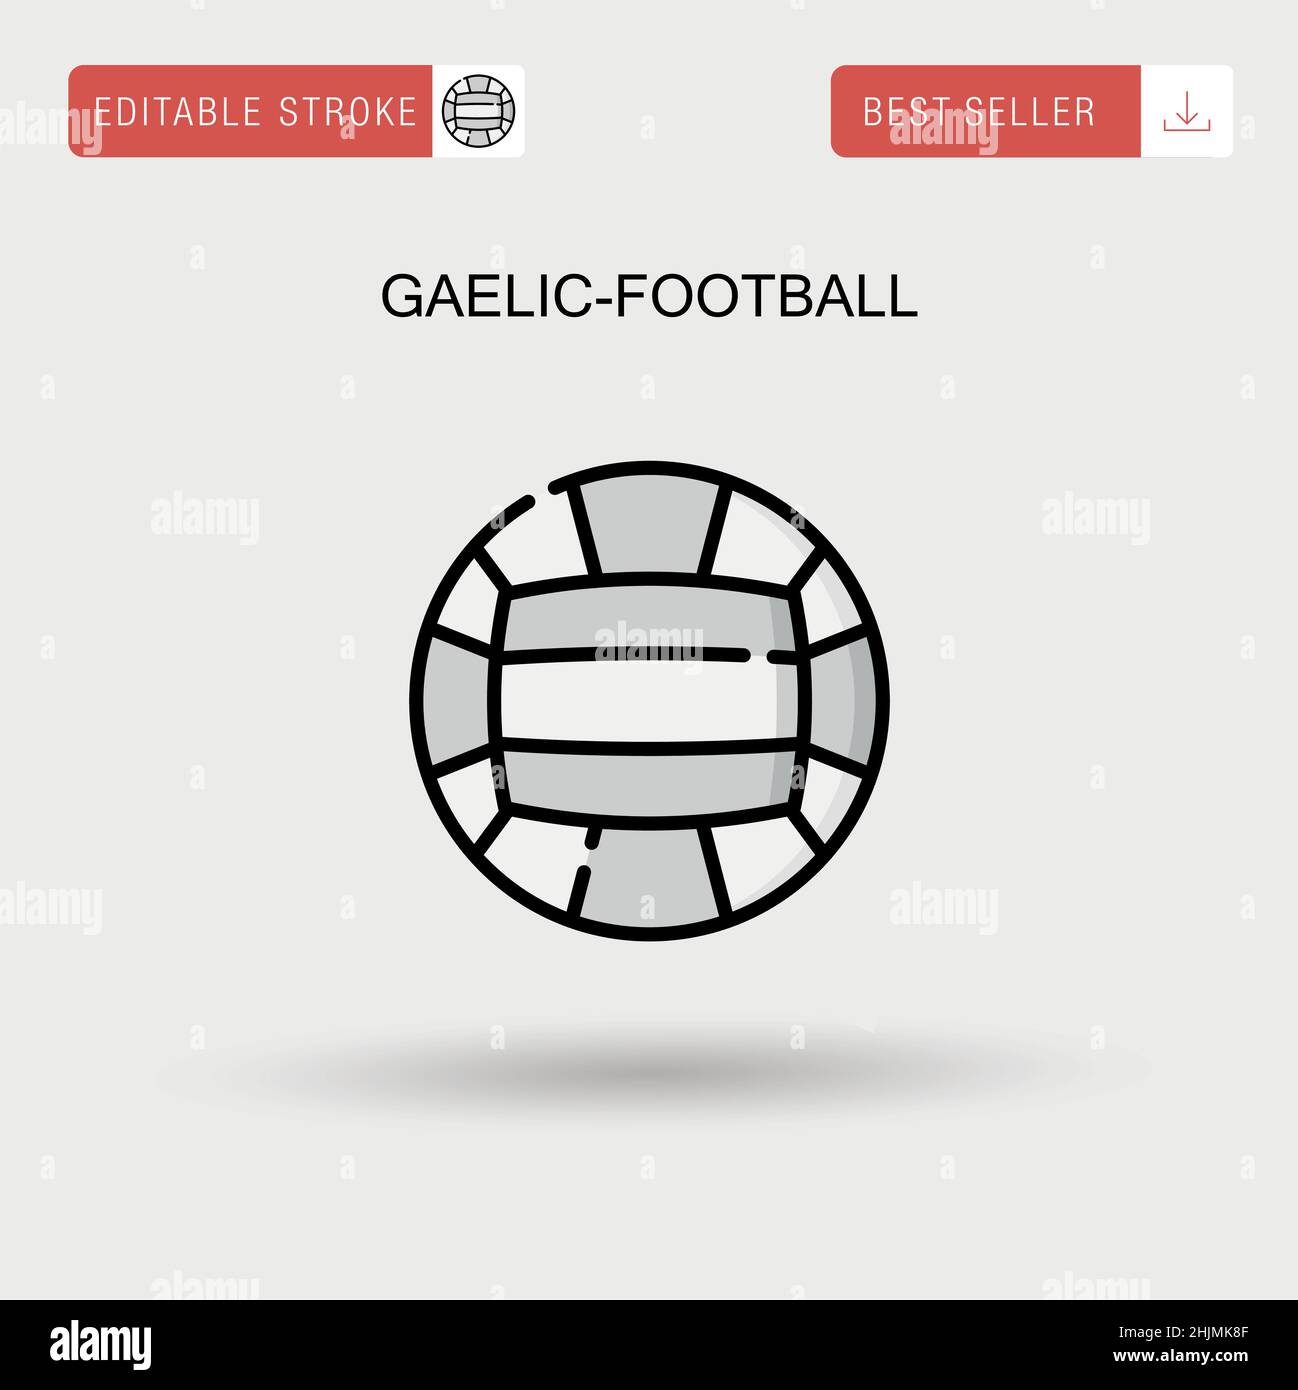 London GAA, 🏑⚽️ Gaelic Games Home matches